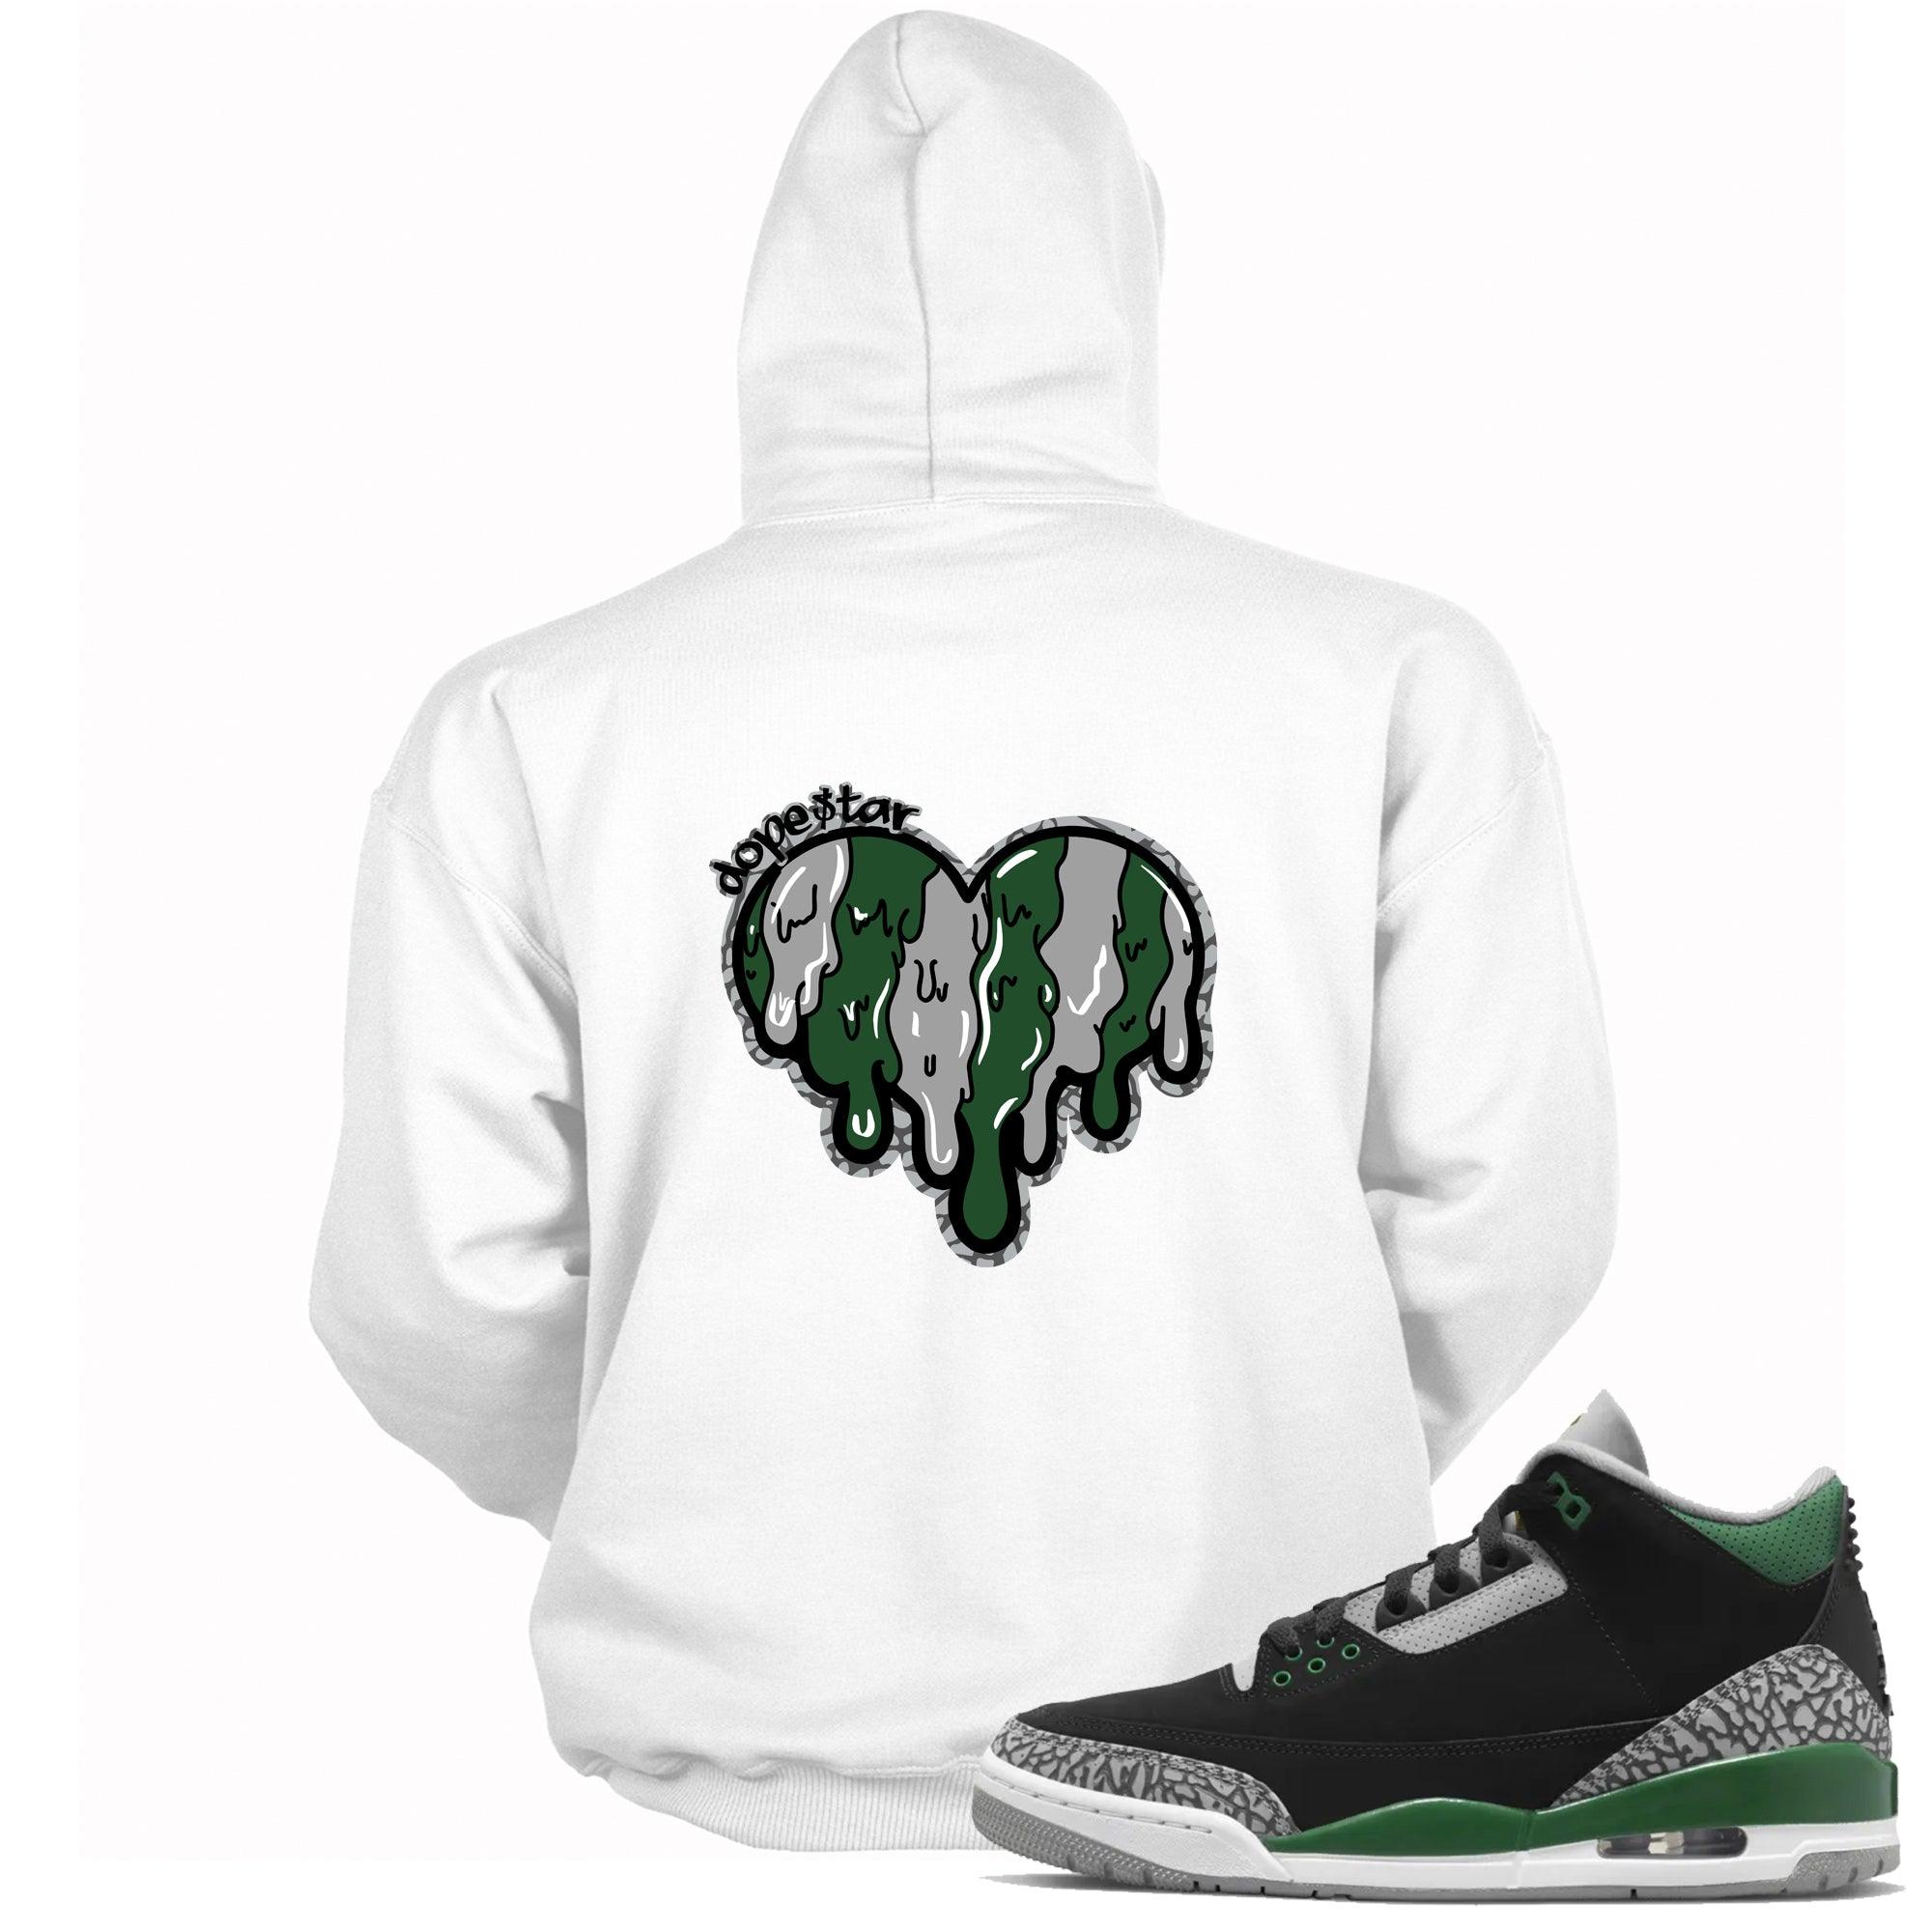 Melting Heart Hoodie Jordan 3s Pine Green photo